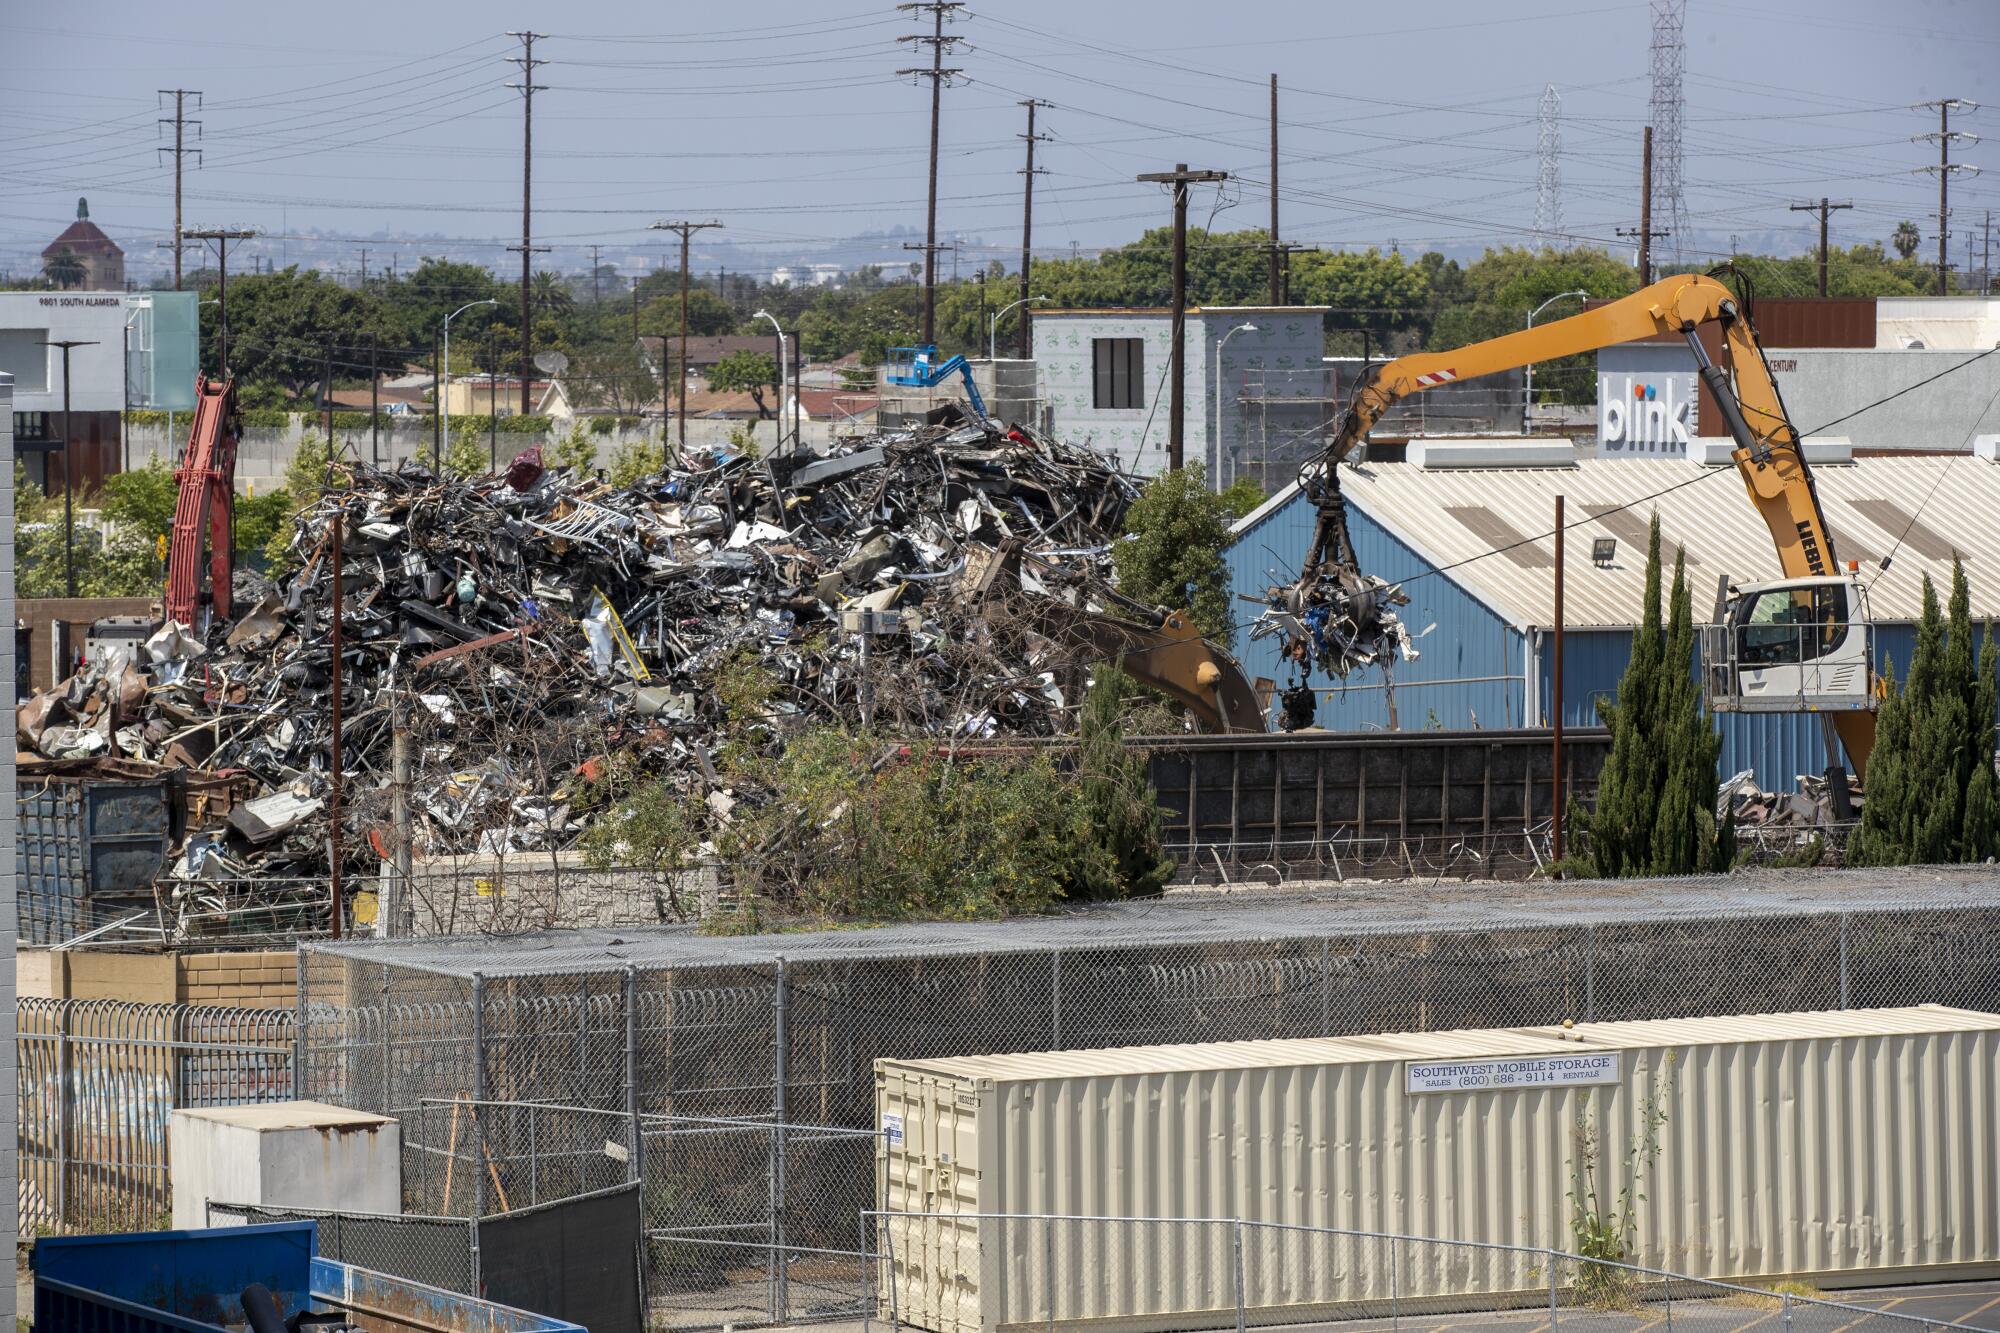 A crane arm lifts metal from a giant scrap heap.